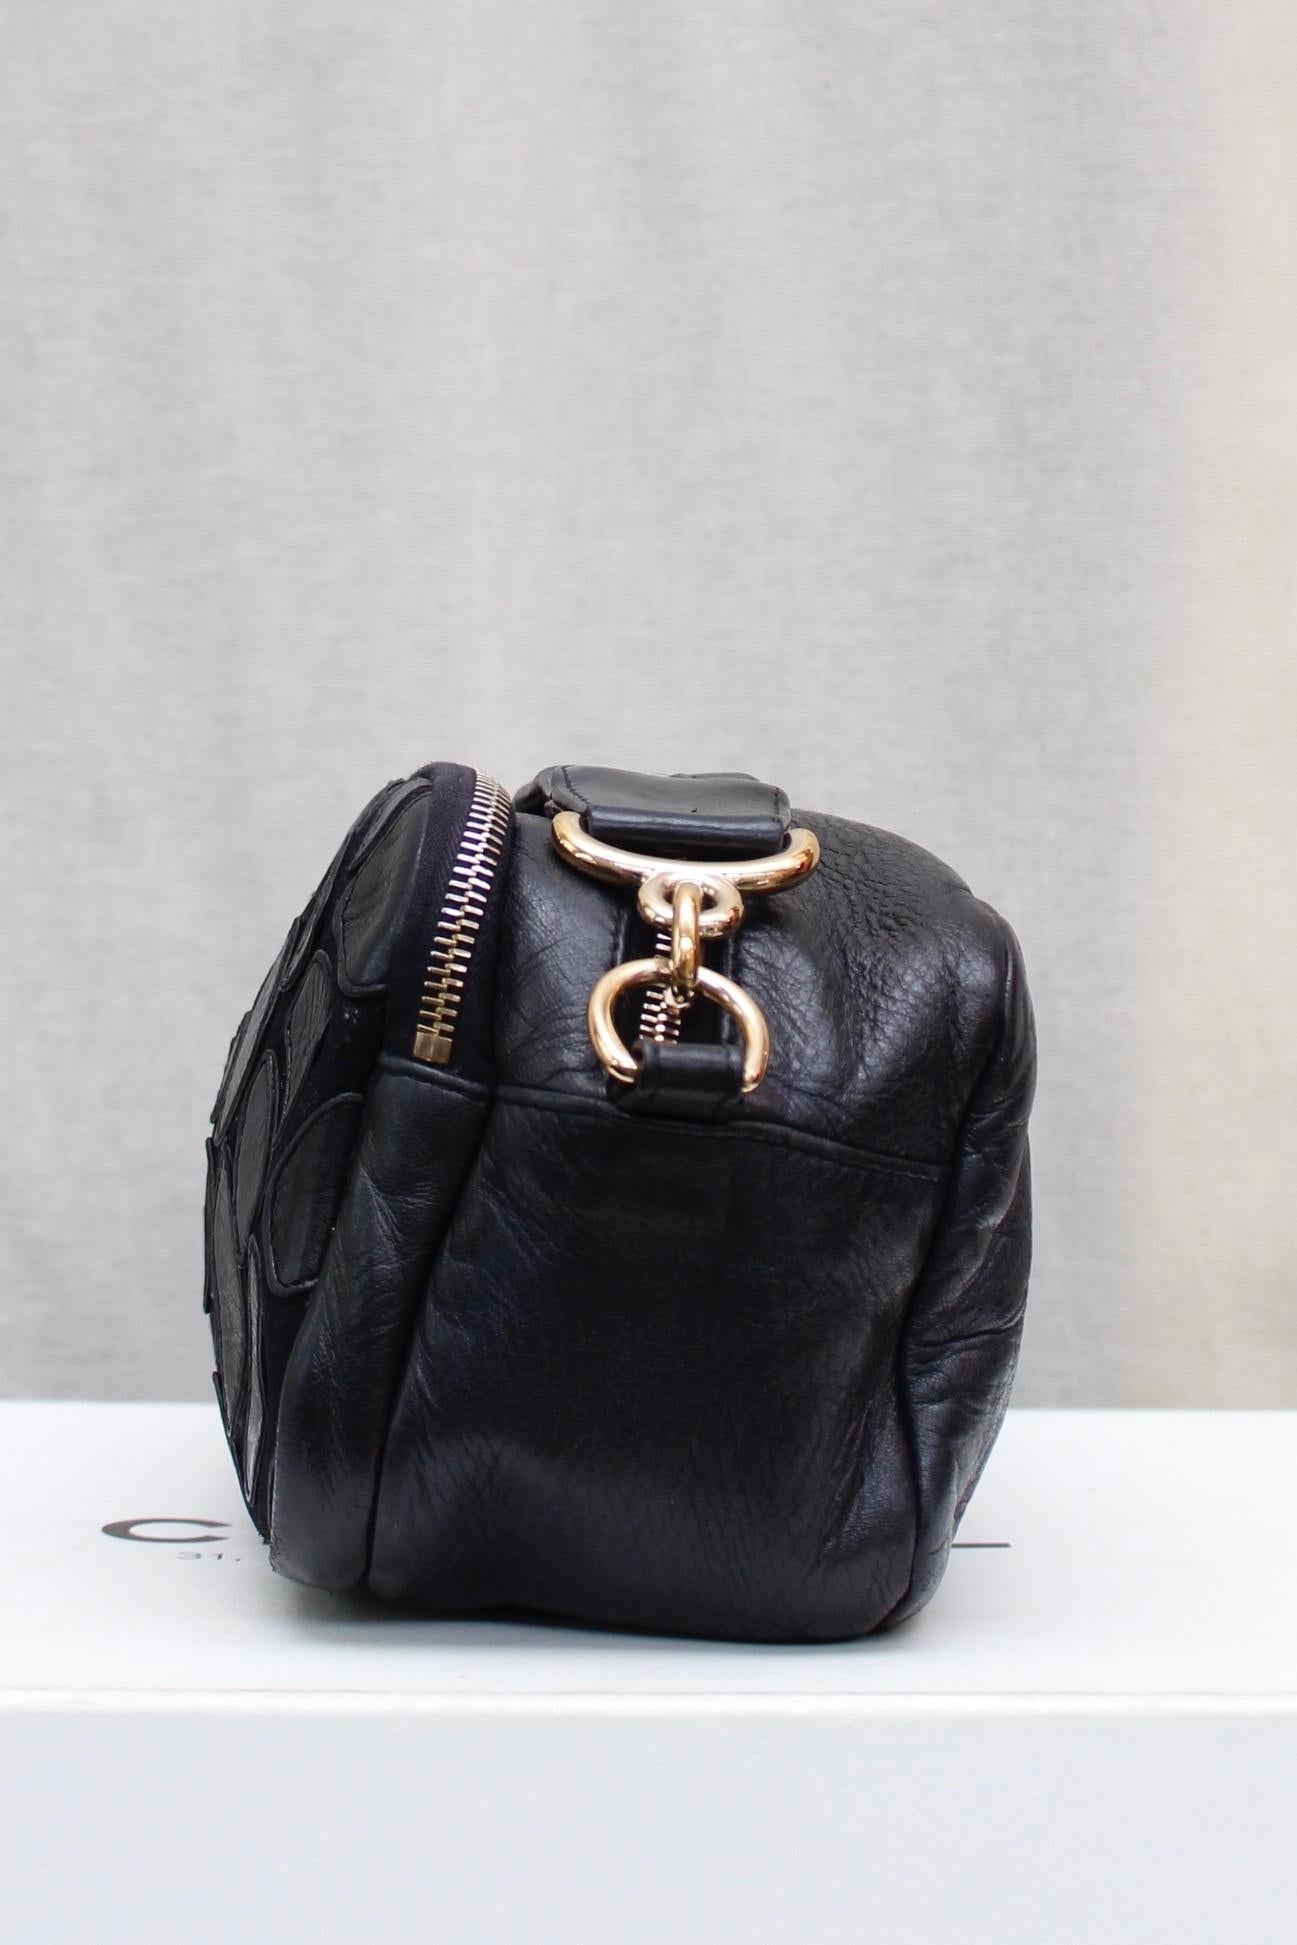 Chanel black leather cross-body bag, 2000’s 3